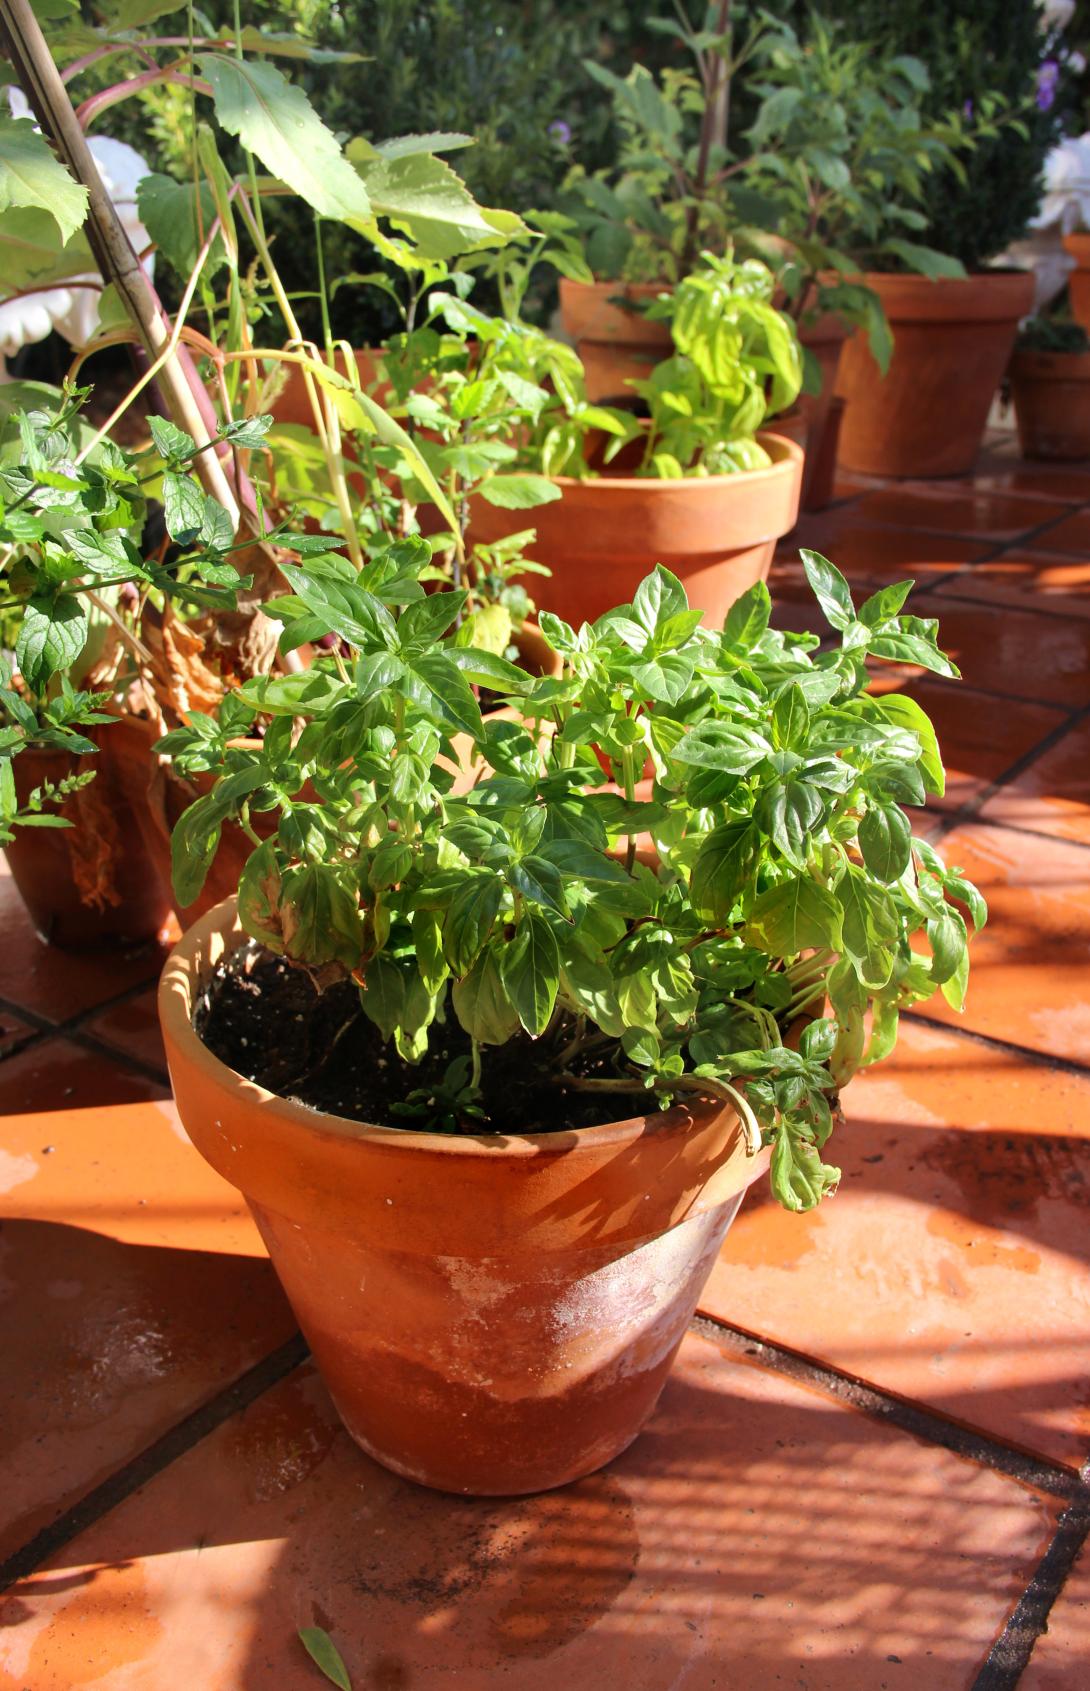 green herbs cultivated on a garden pot 